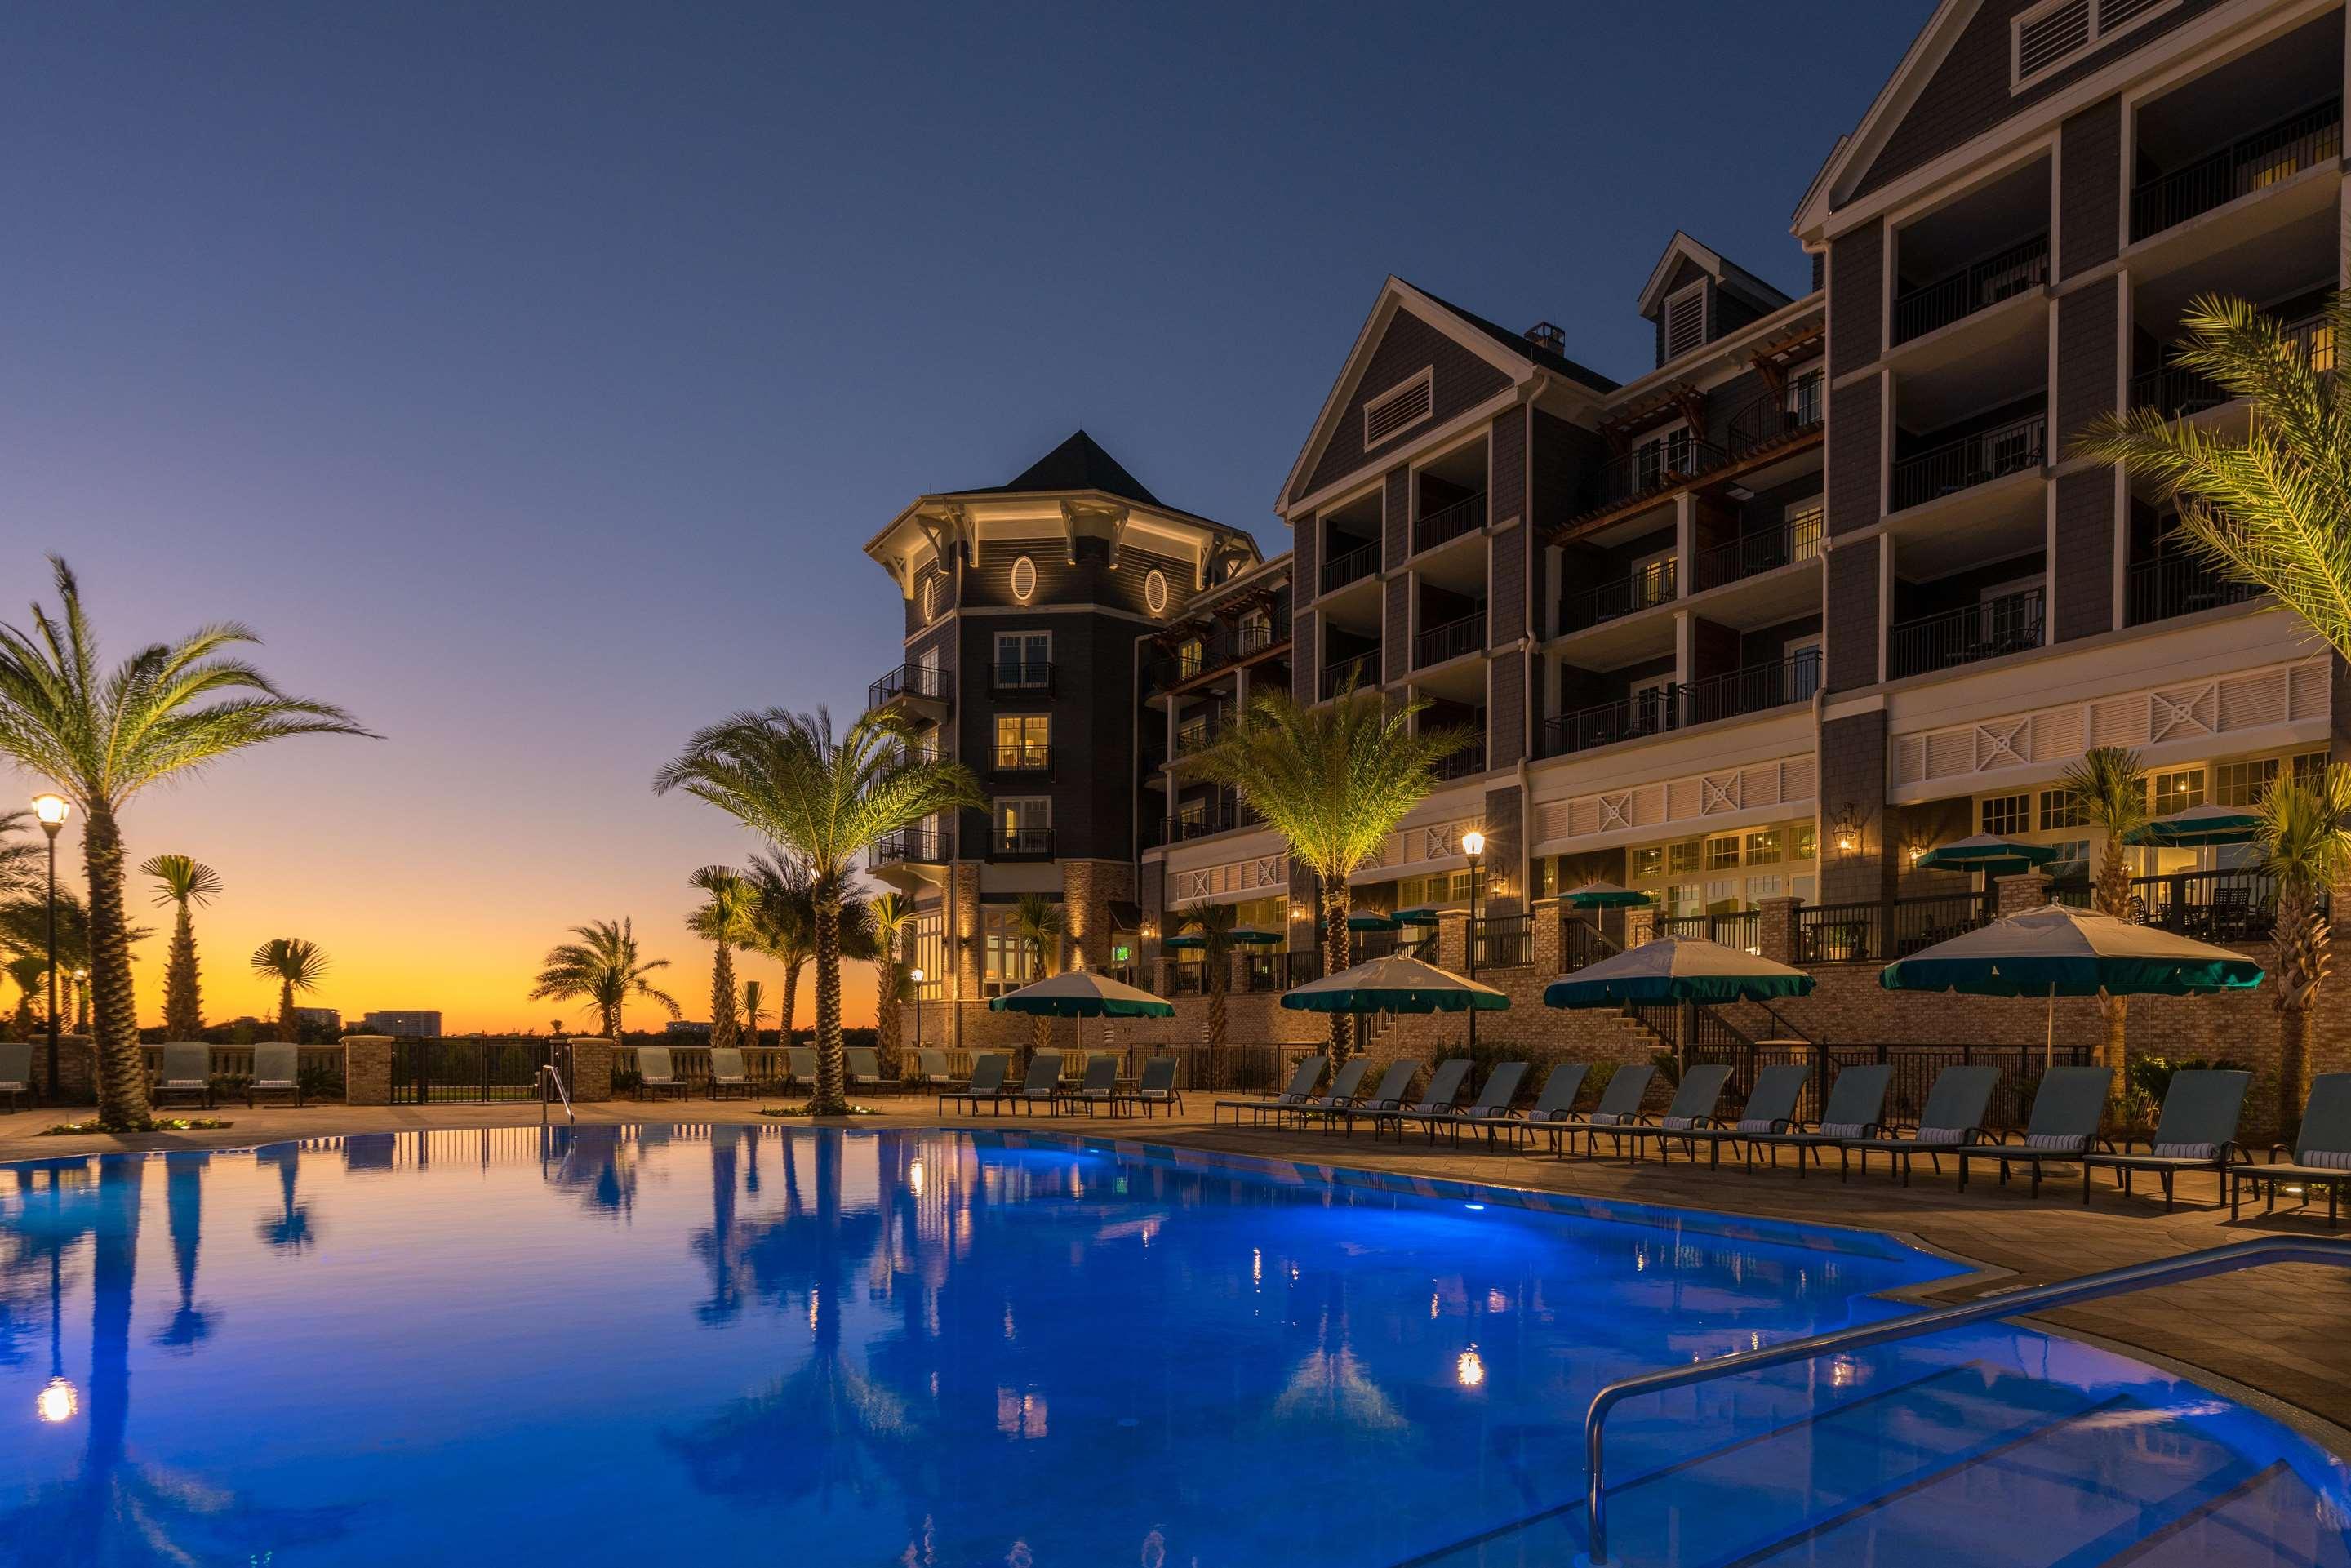 20 Best Hotels In Santa Rosa Beach Hotels From 75 Night Kayak